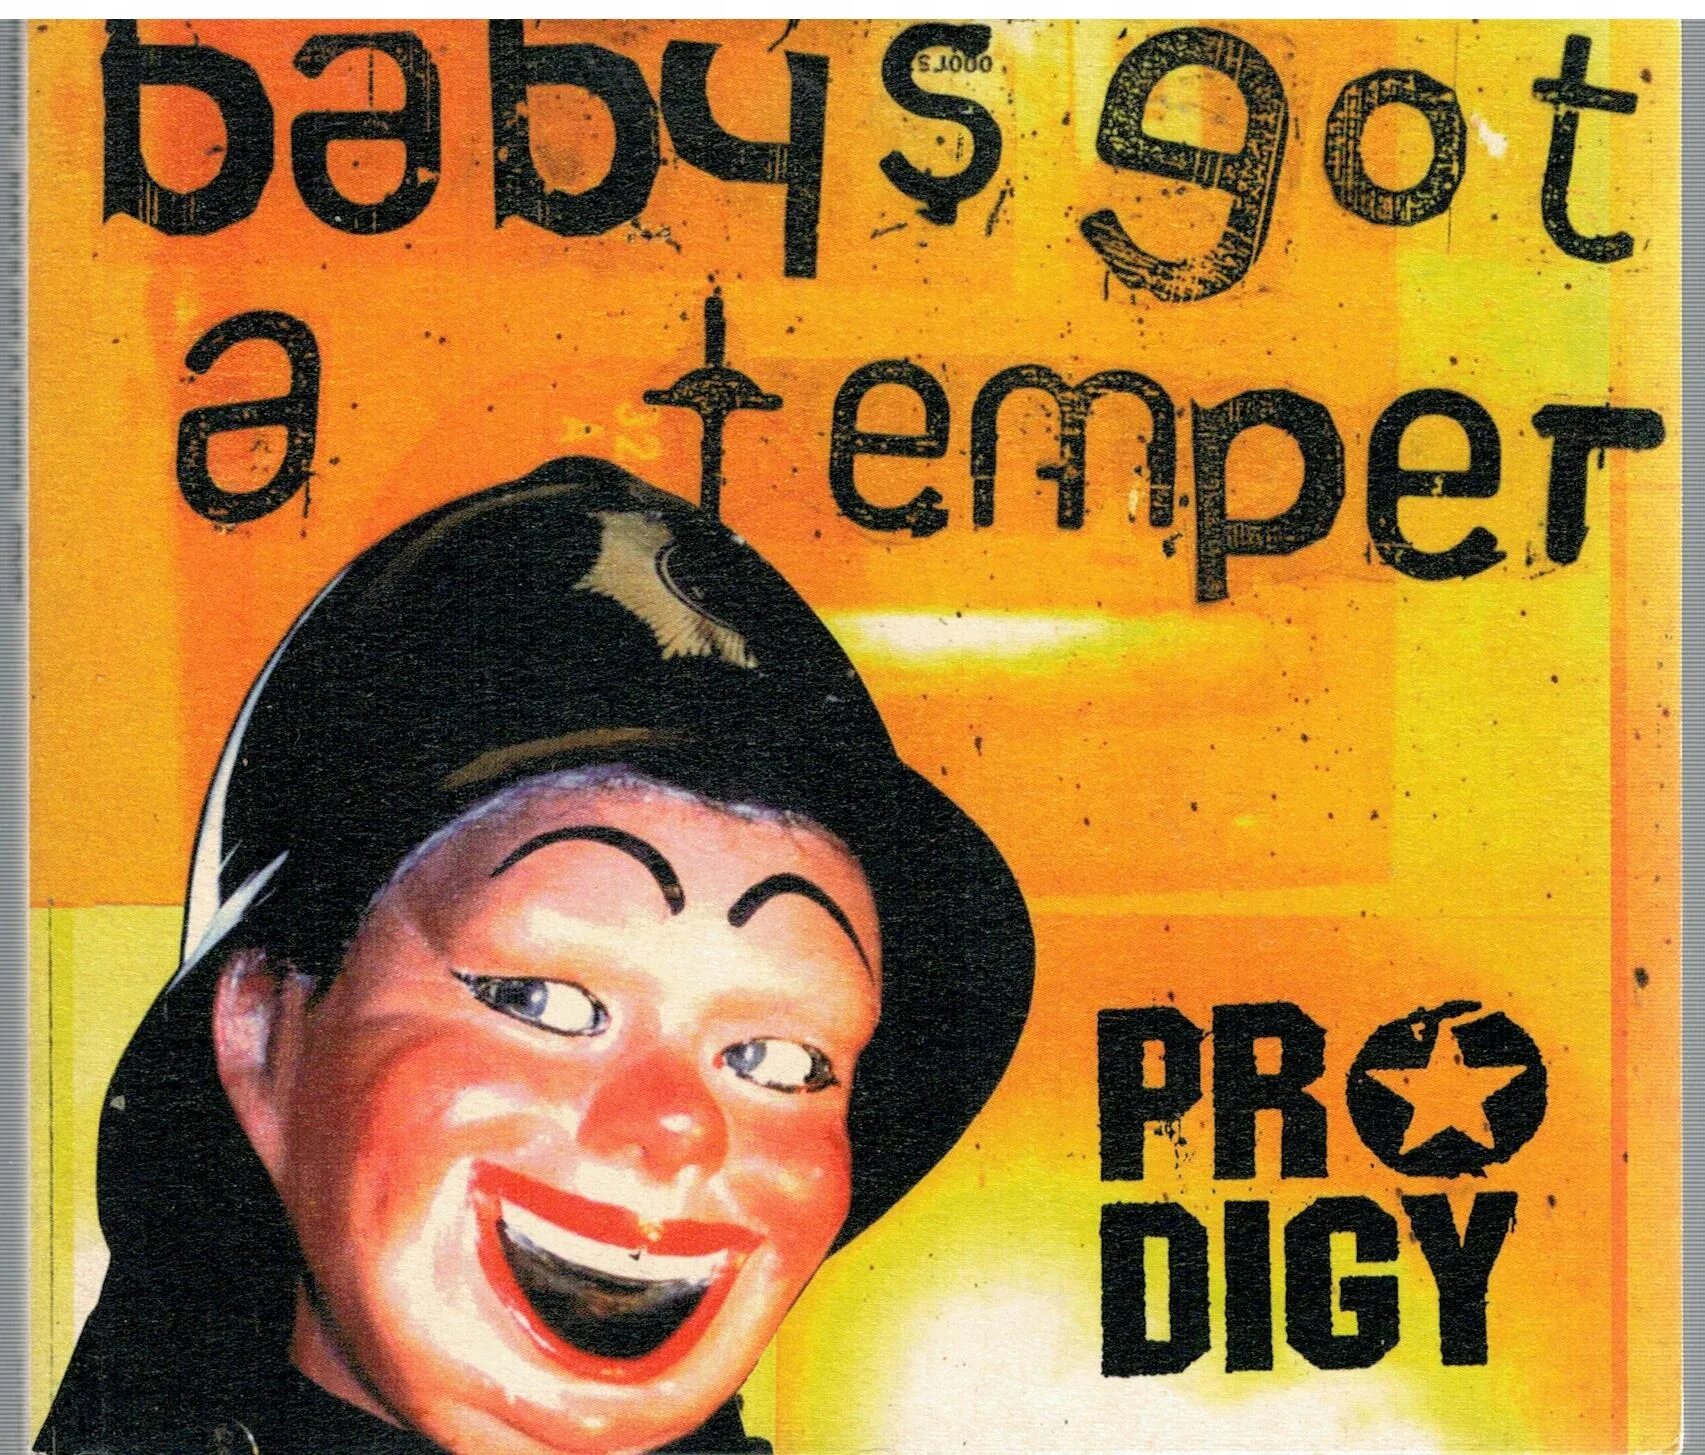 Prodigy обложка Baby s got. The Prodigy Baby's got a Temper. Prodigy Baby's got a Temper фото. The Prodigy Baby's got a Temper 2002 обложка.